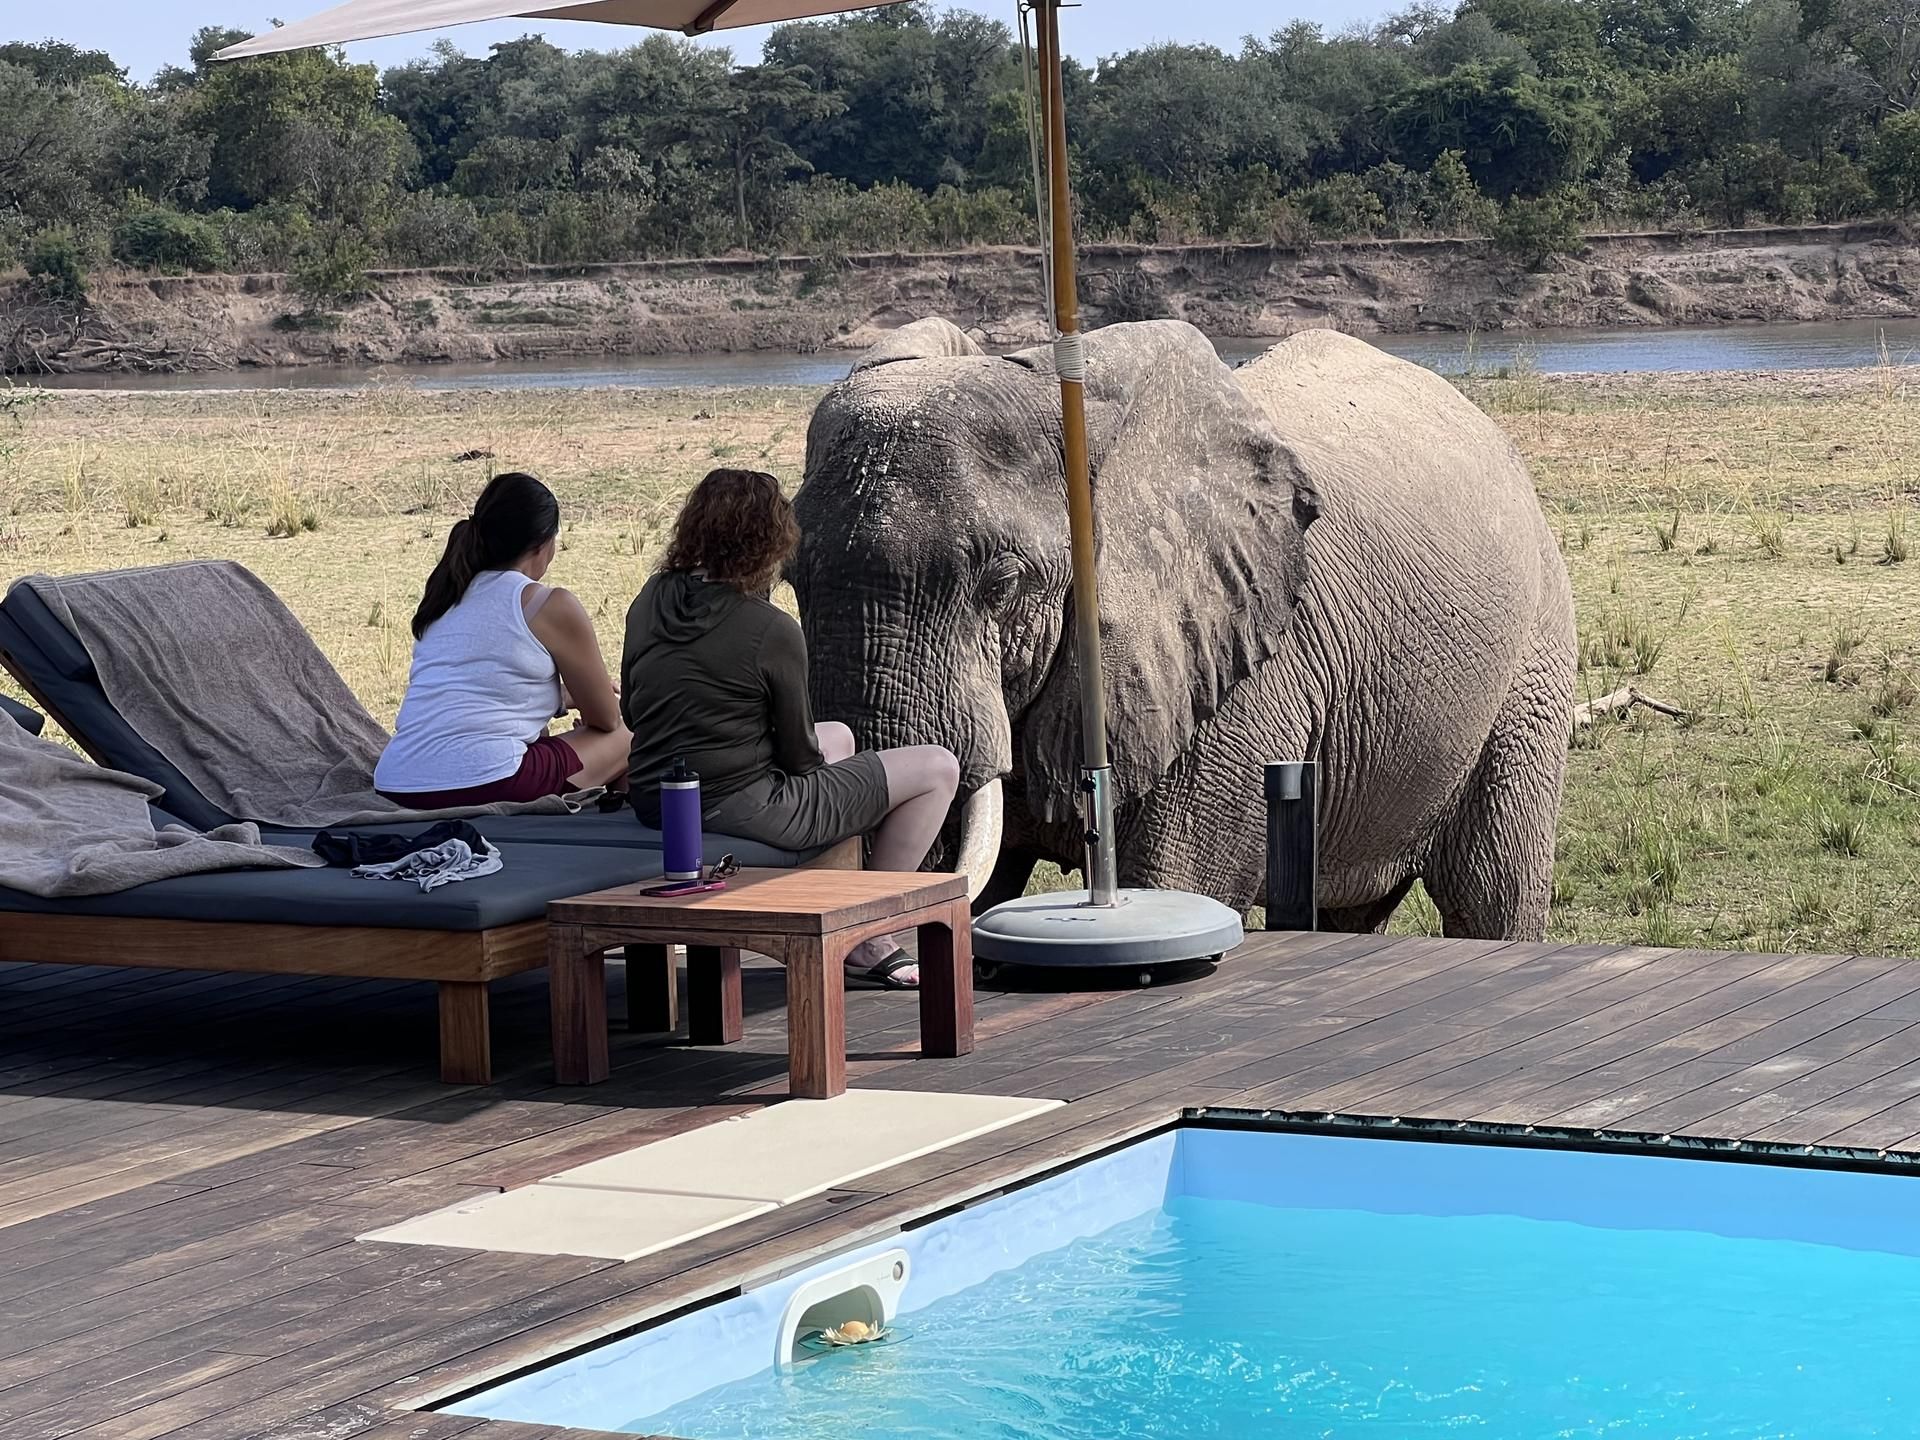 Elephant at Chikunto Safari Lodge